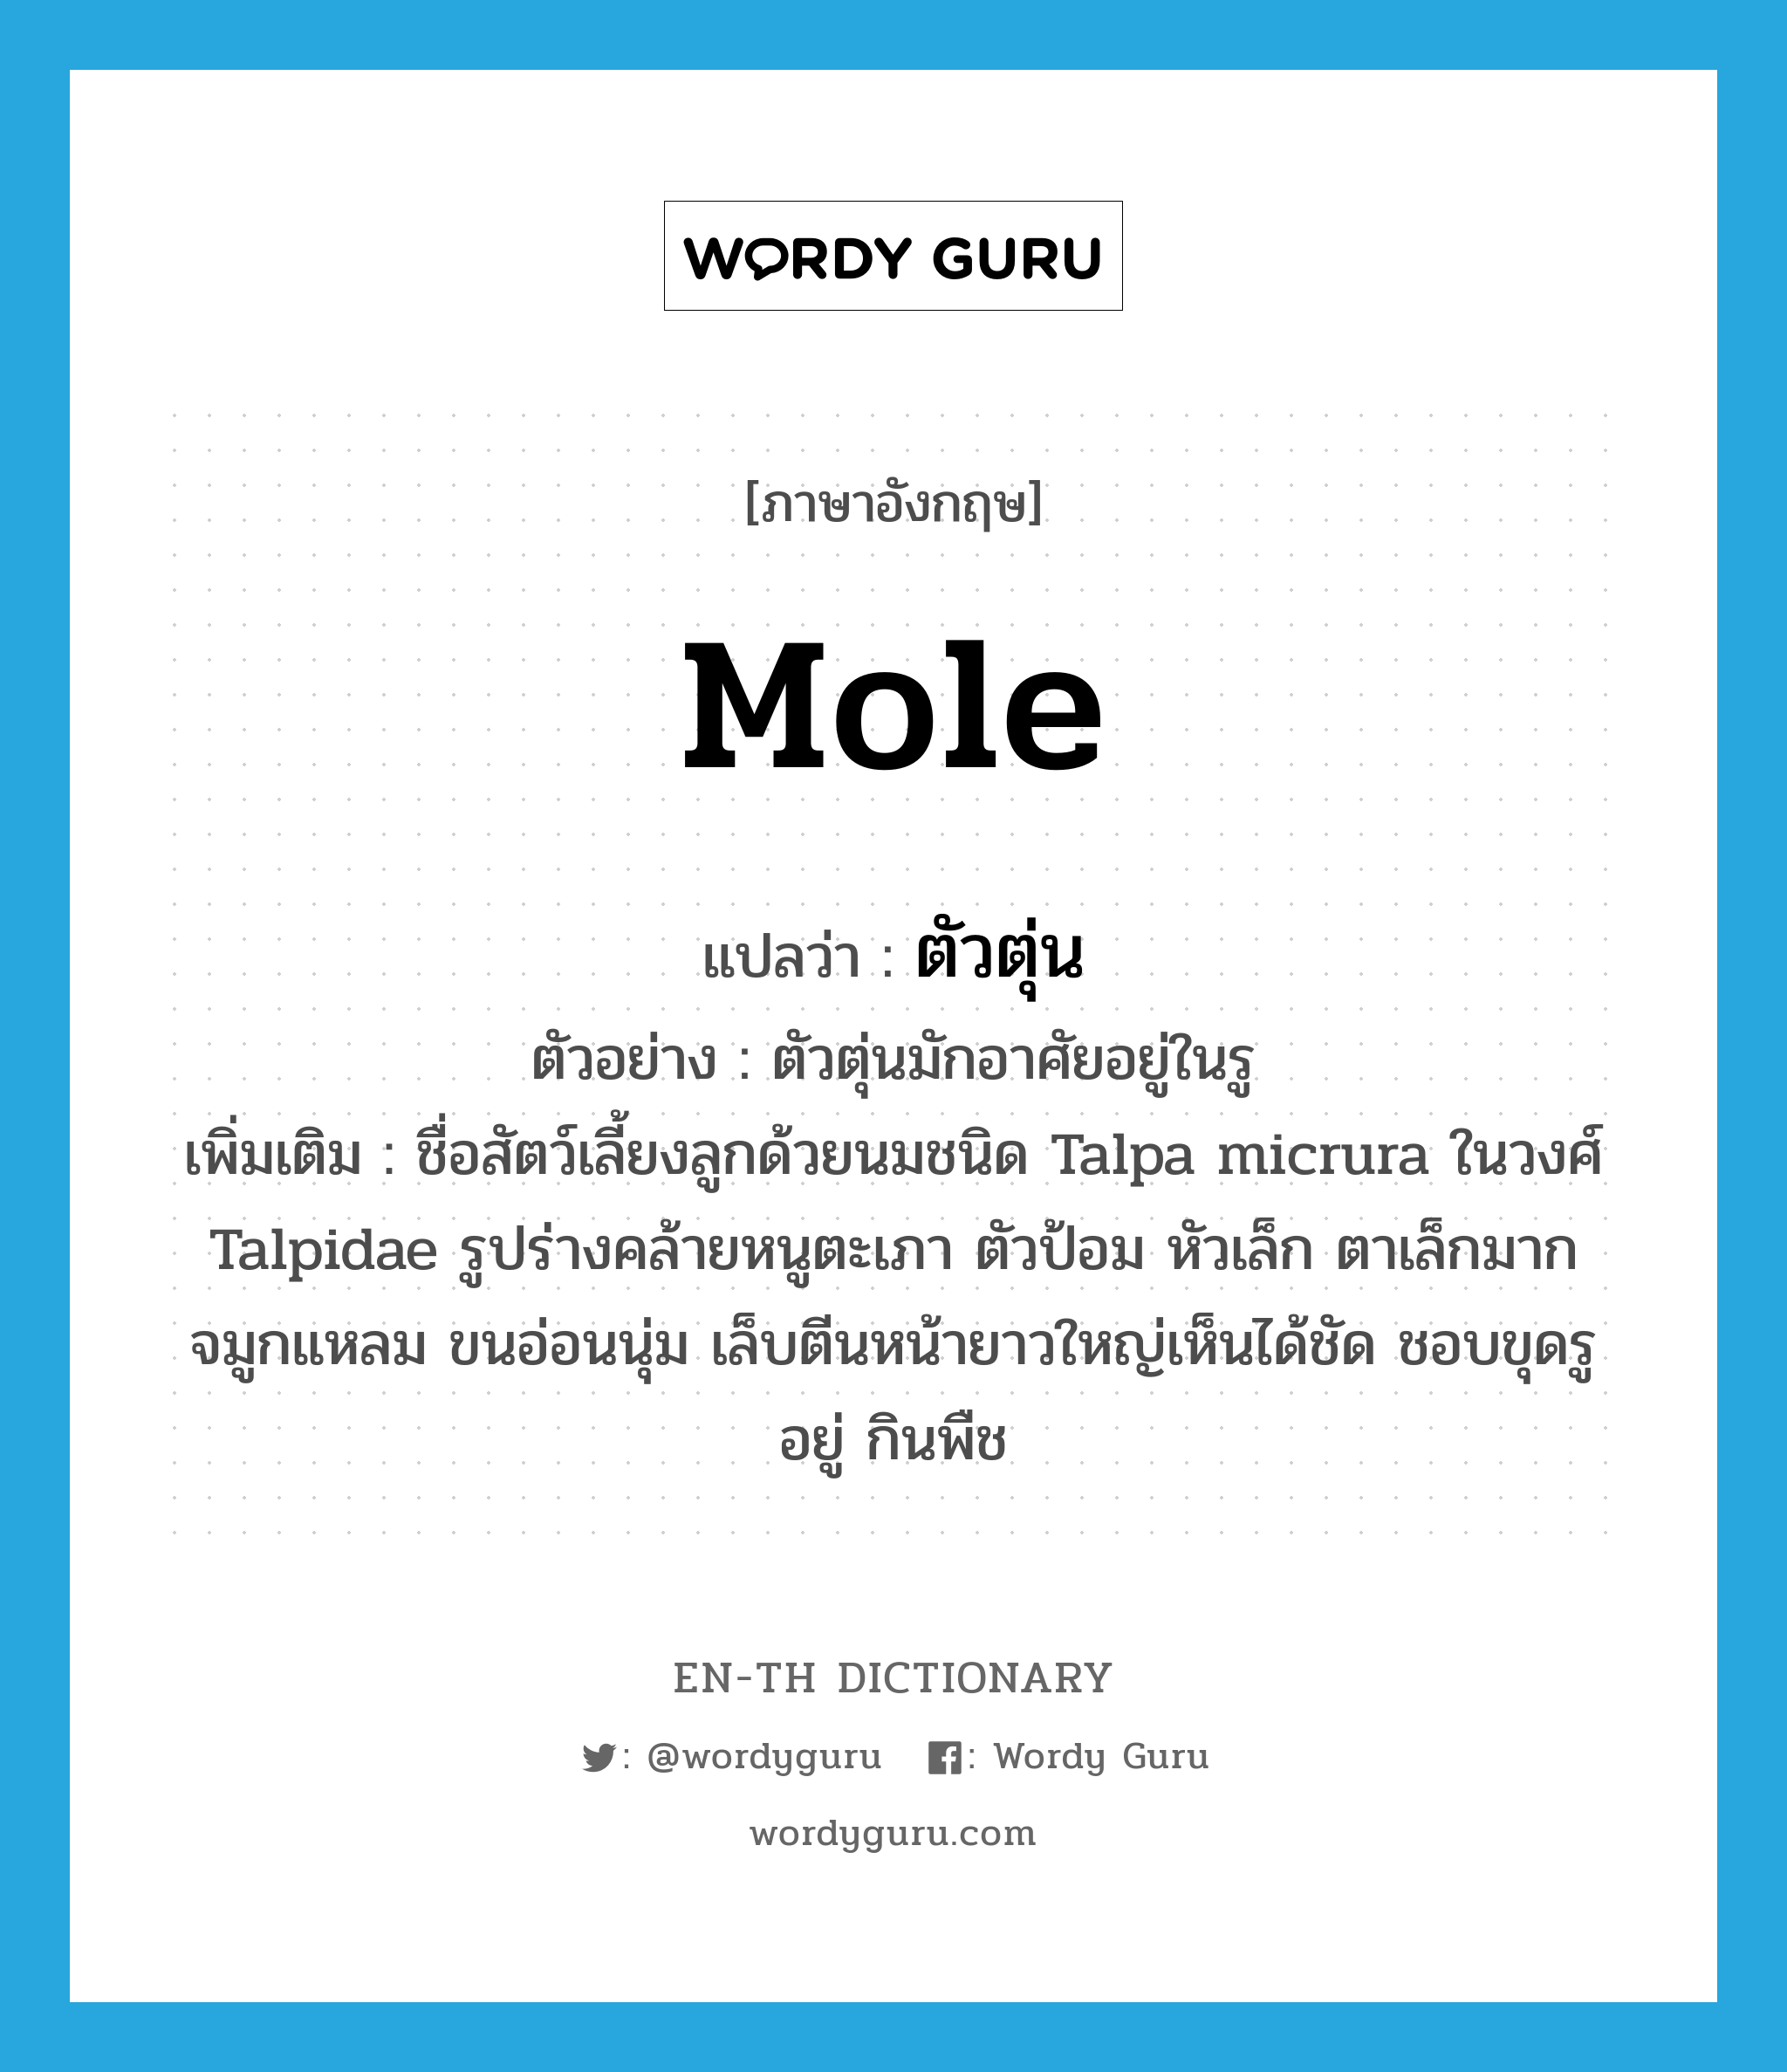 mole แปลว่า?, คำศัพท์ภาษาอังกฤษ mole แปลว่า ตัวตุ่น ประเภท N ตัวอย่าง ตัวตุ่นมักอาศัยอยู่ในรู เพิ่มเติม ชื่อสัตว์เลี้ยงลูกด้วยนมชนิด Talpa micrura ในวงศ์ Talpidae รูปร่างคล้ายหนูตะเภา ตัวป้อม หัวเล็ก ตาเล็กมาก จมูกแหลม ขนอ่อนนุ่ม เล็บตีนหน้ายาวใหญ่เห็นได้ชัด ชอบขุดรูอยู่ กินพืช หมวด N